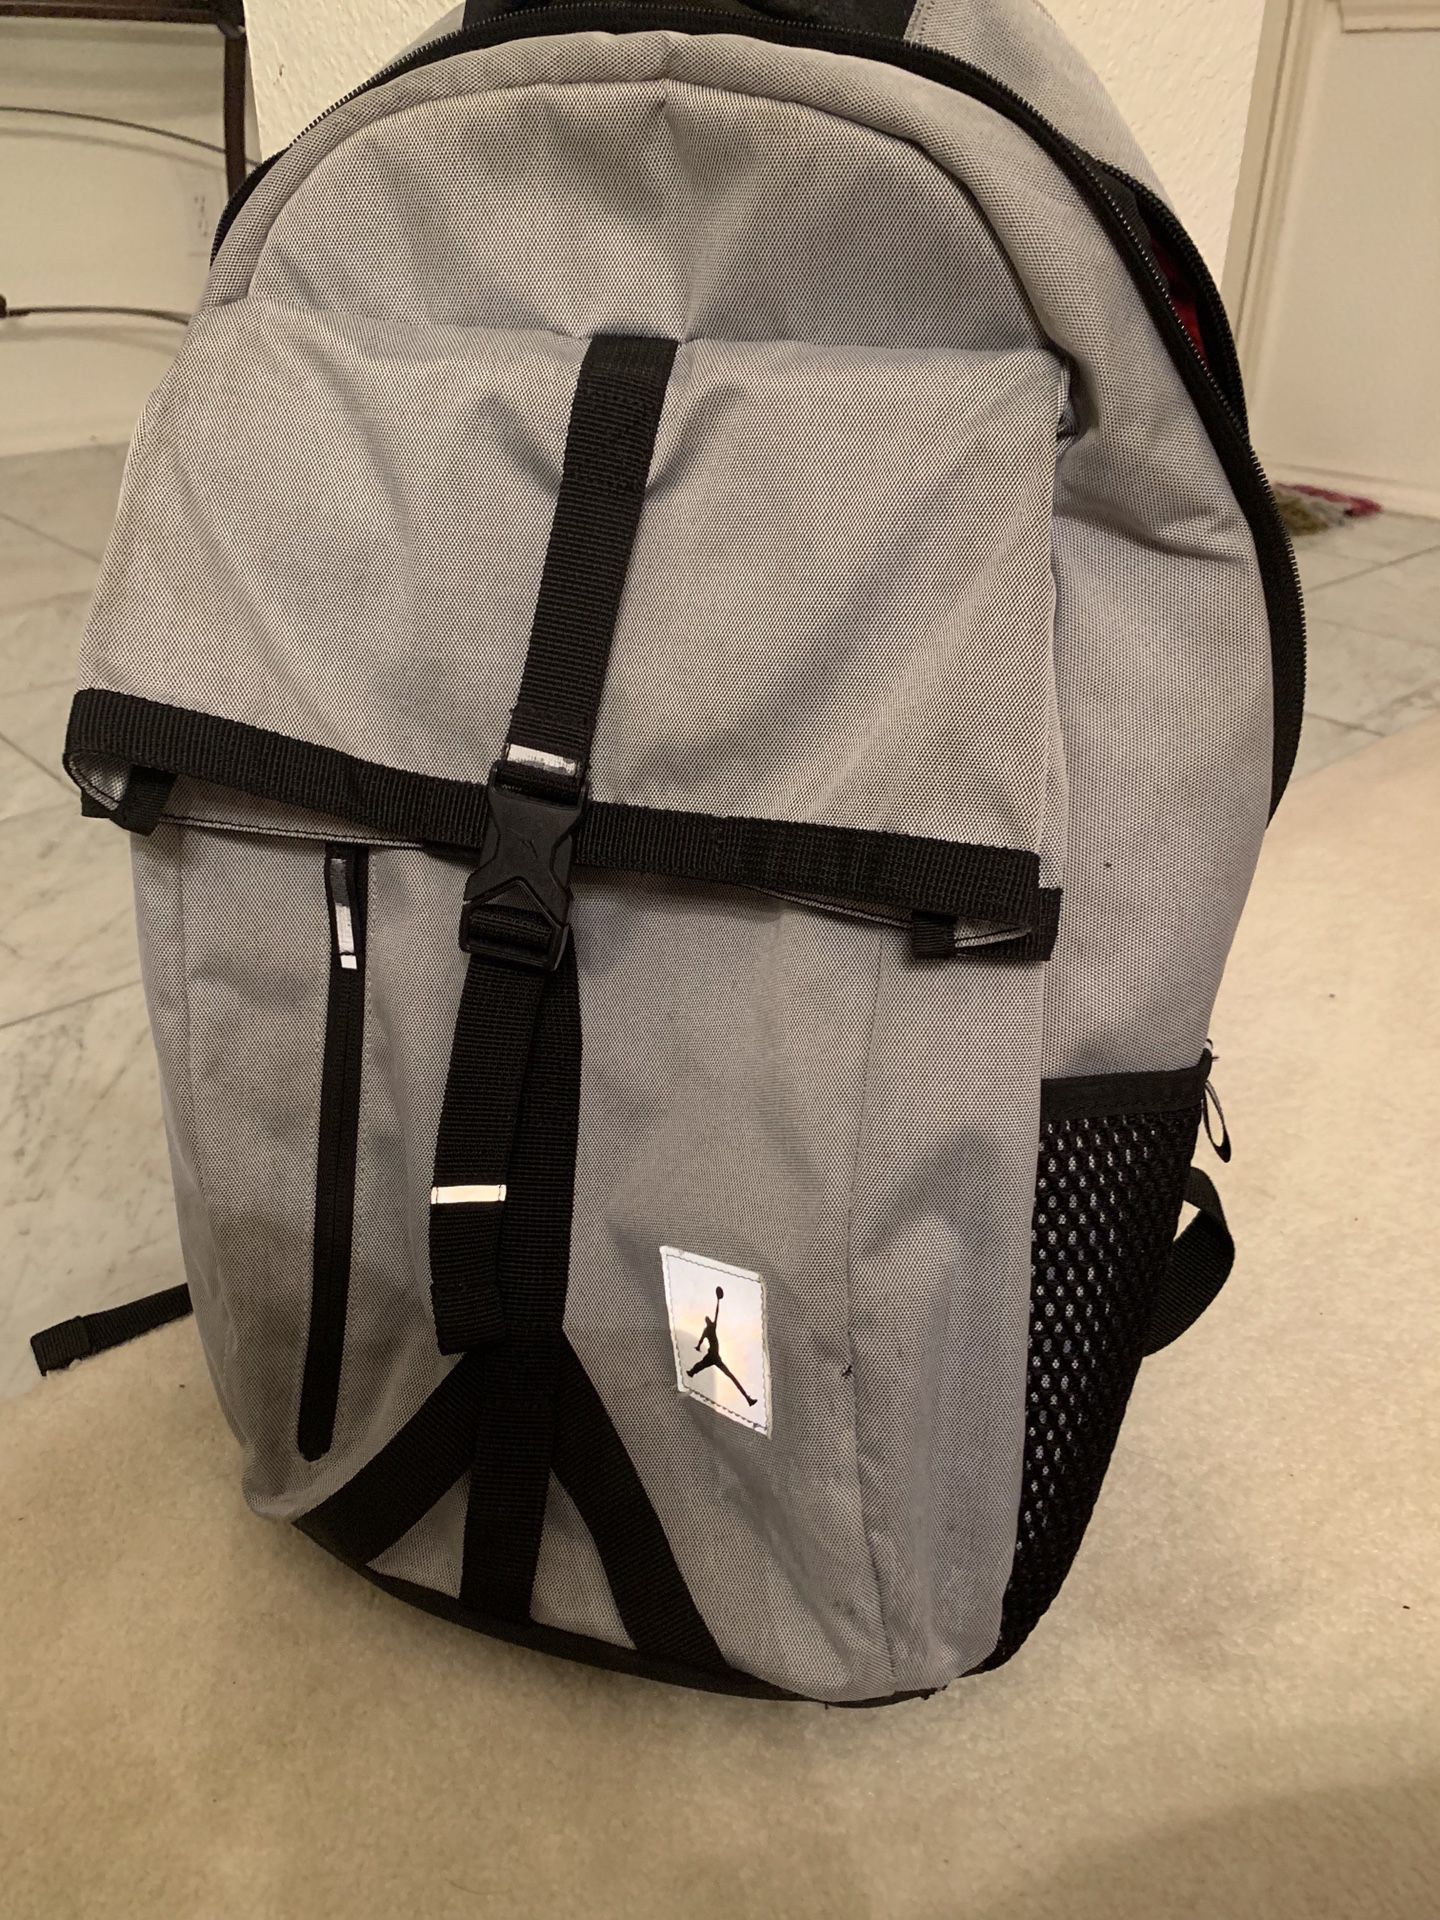 Jordan Backpack with laptop storage